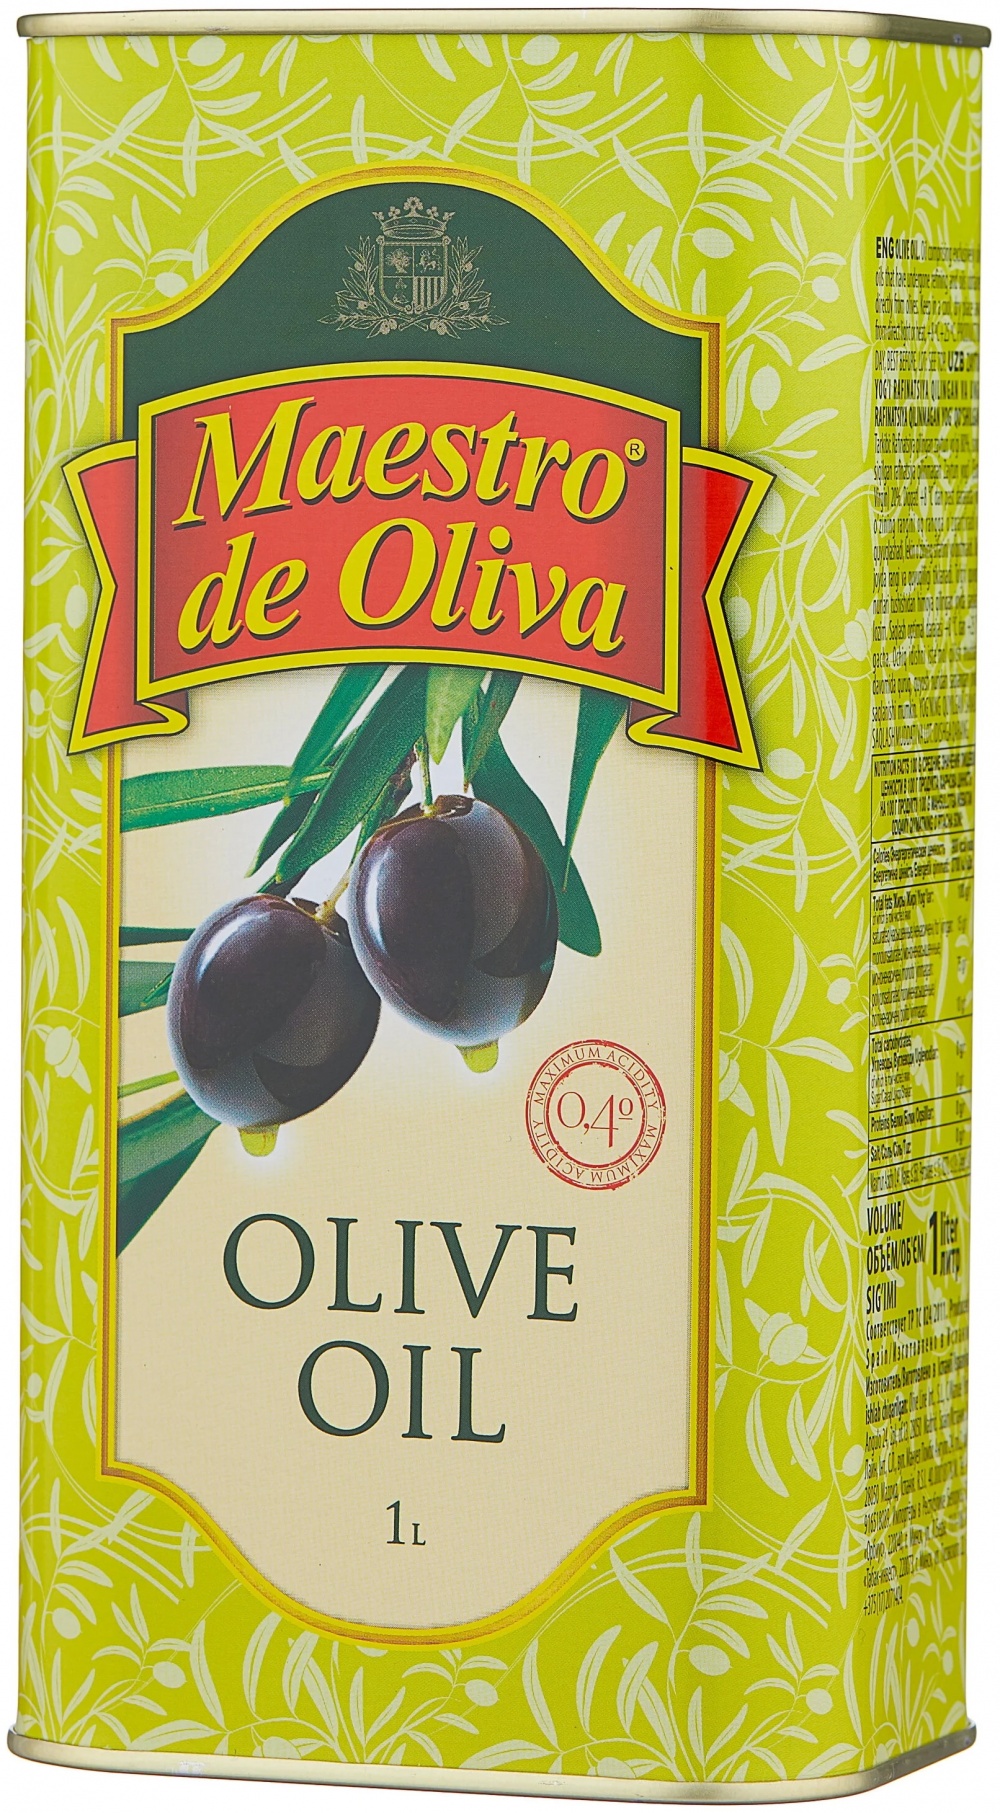 De oliva масло. Maestro de Oliva оливковое масло. Maestro de Oliva масло 1 л. Масло маэстро де олива 1л жб банка. Maestro de Oliva масло оливковое Extra Virgin.